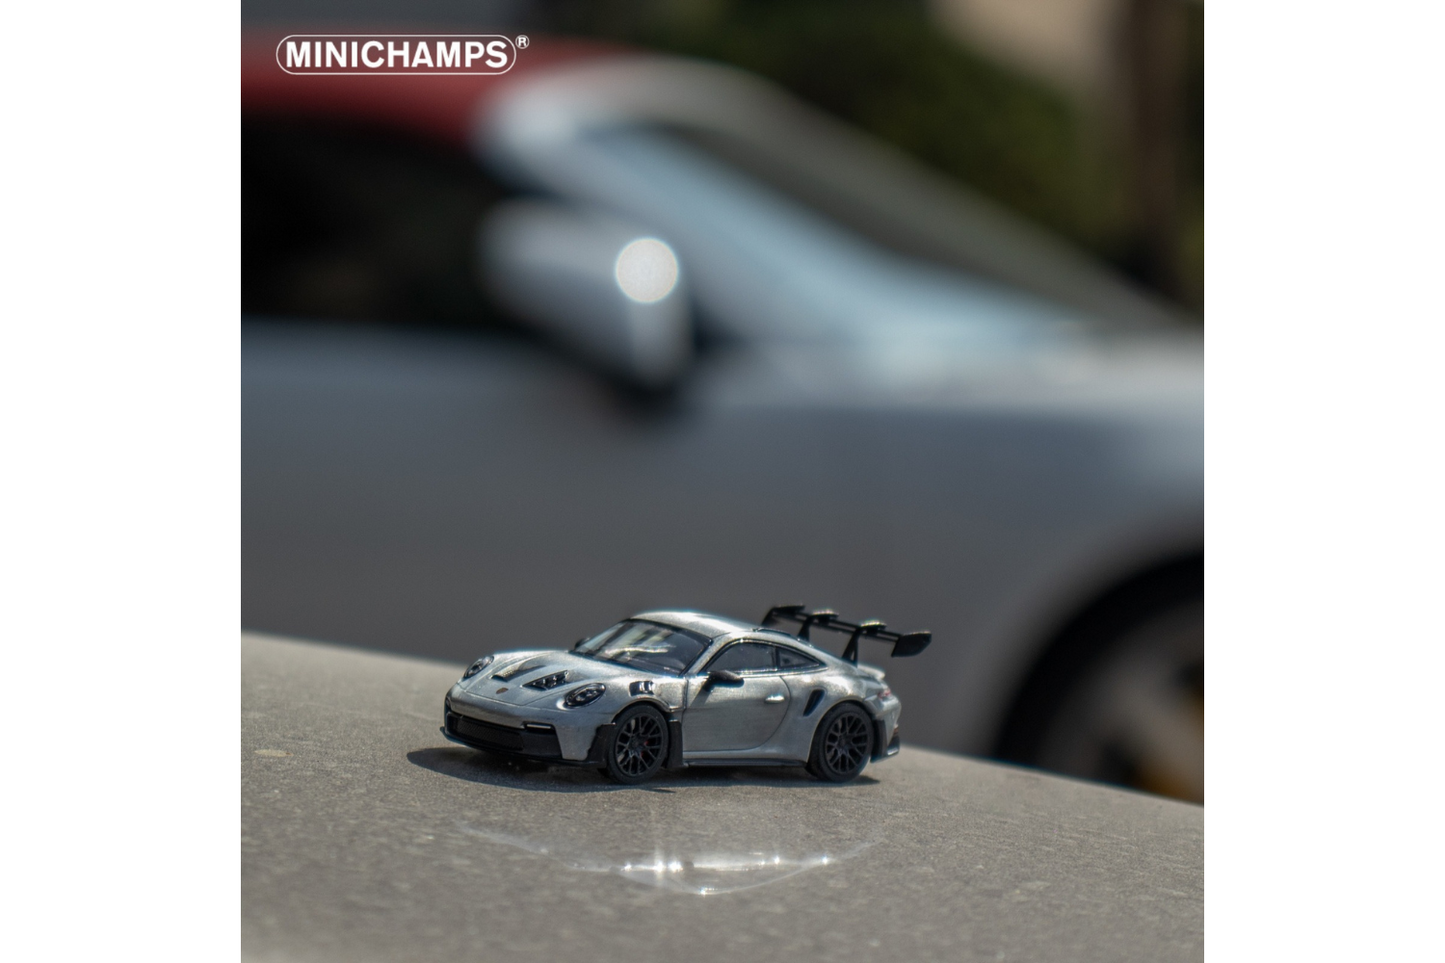 Minichamps64 x CLDC Exclusive Porsche 911 GT3 RS in Gloss Raw Silver (English Magazine)